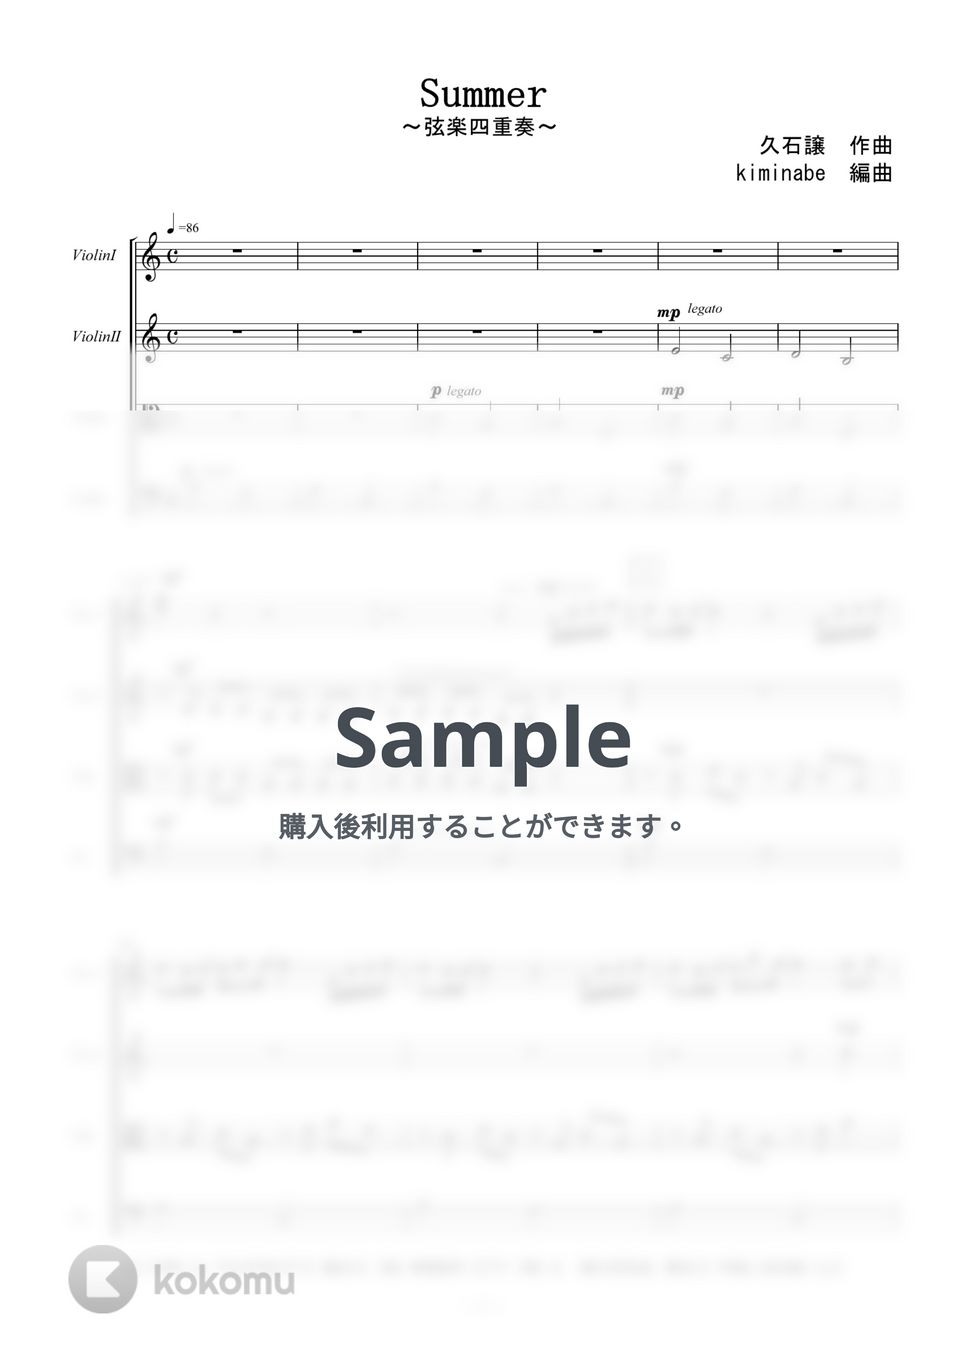 久石譲 - Summer (弦楽四重奏) by kiminabe